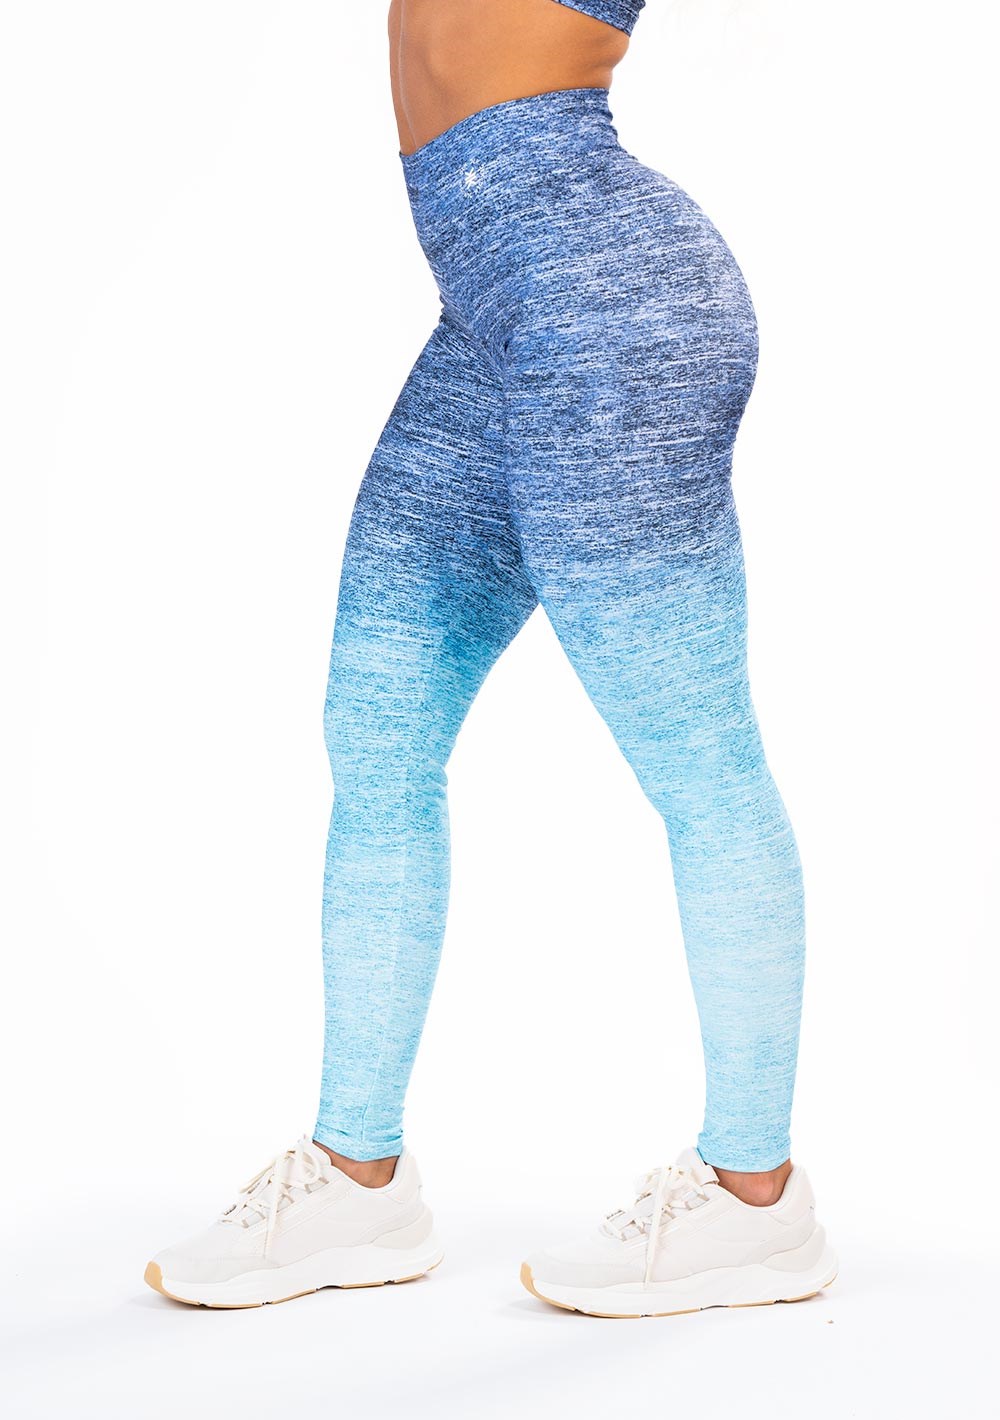 Legging fitness feminina new printed estampada melange azul